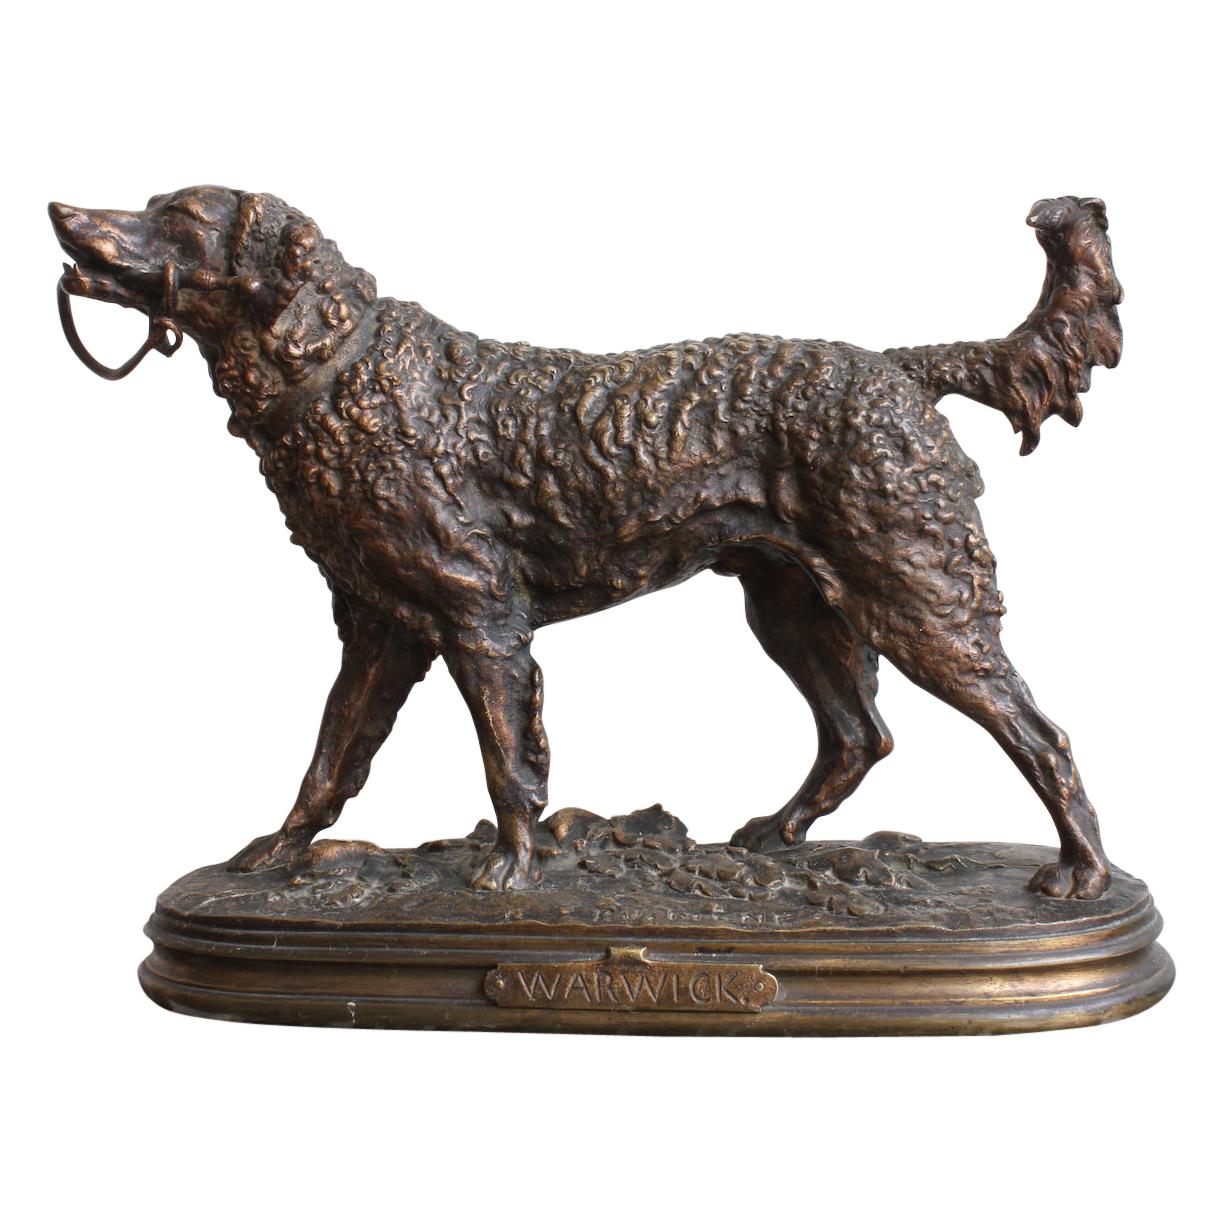 19th Century Dog Sculpture by Pj Mene, Warwick